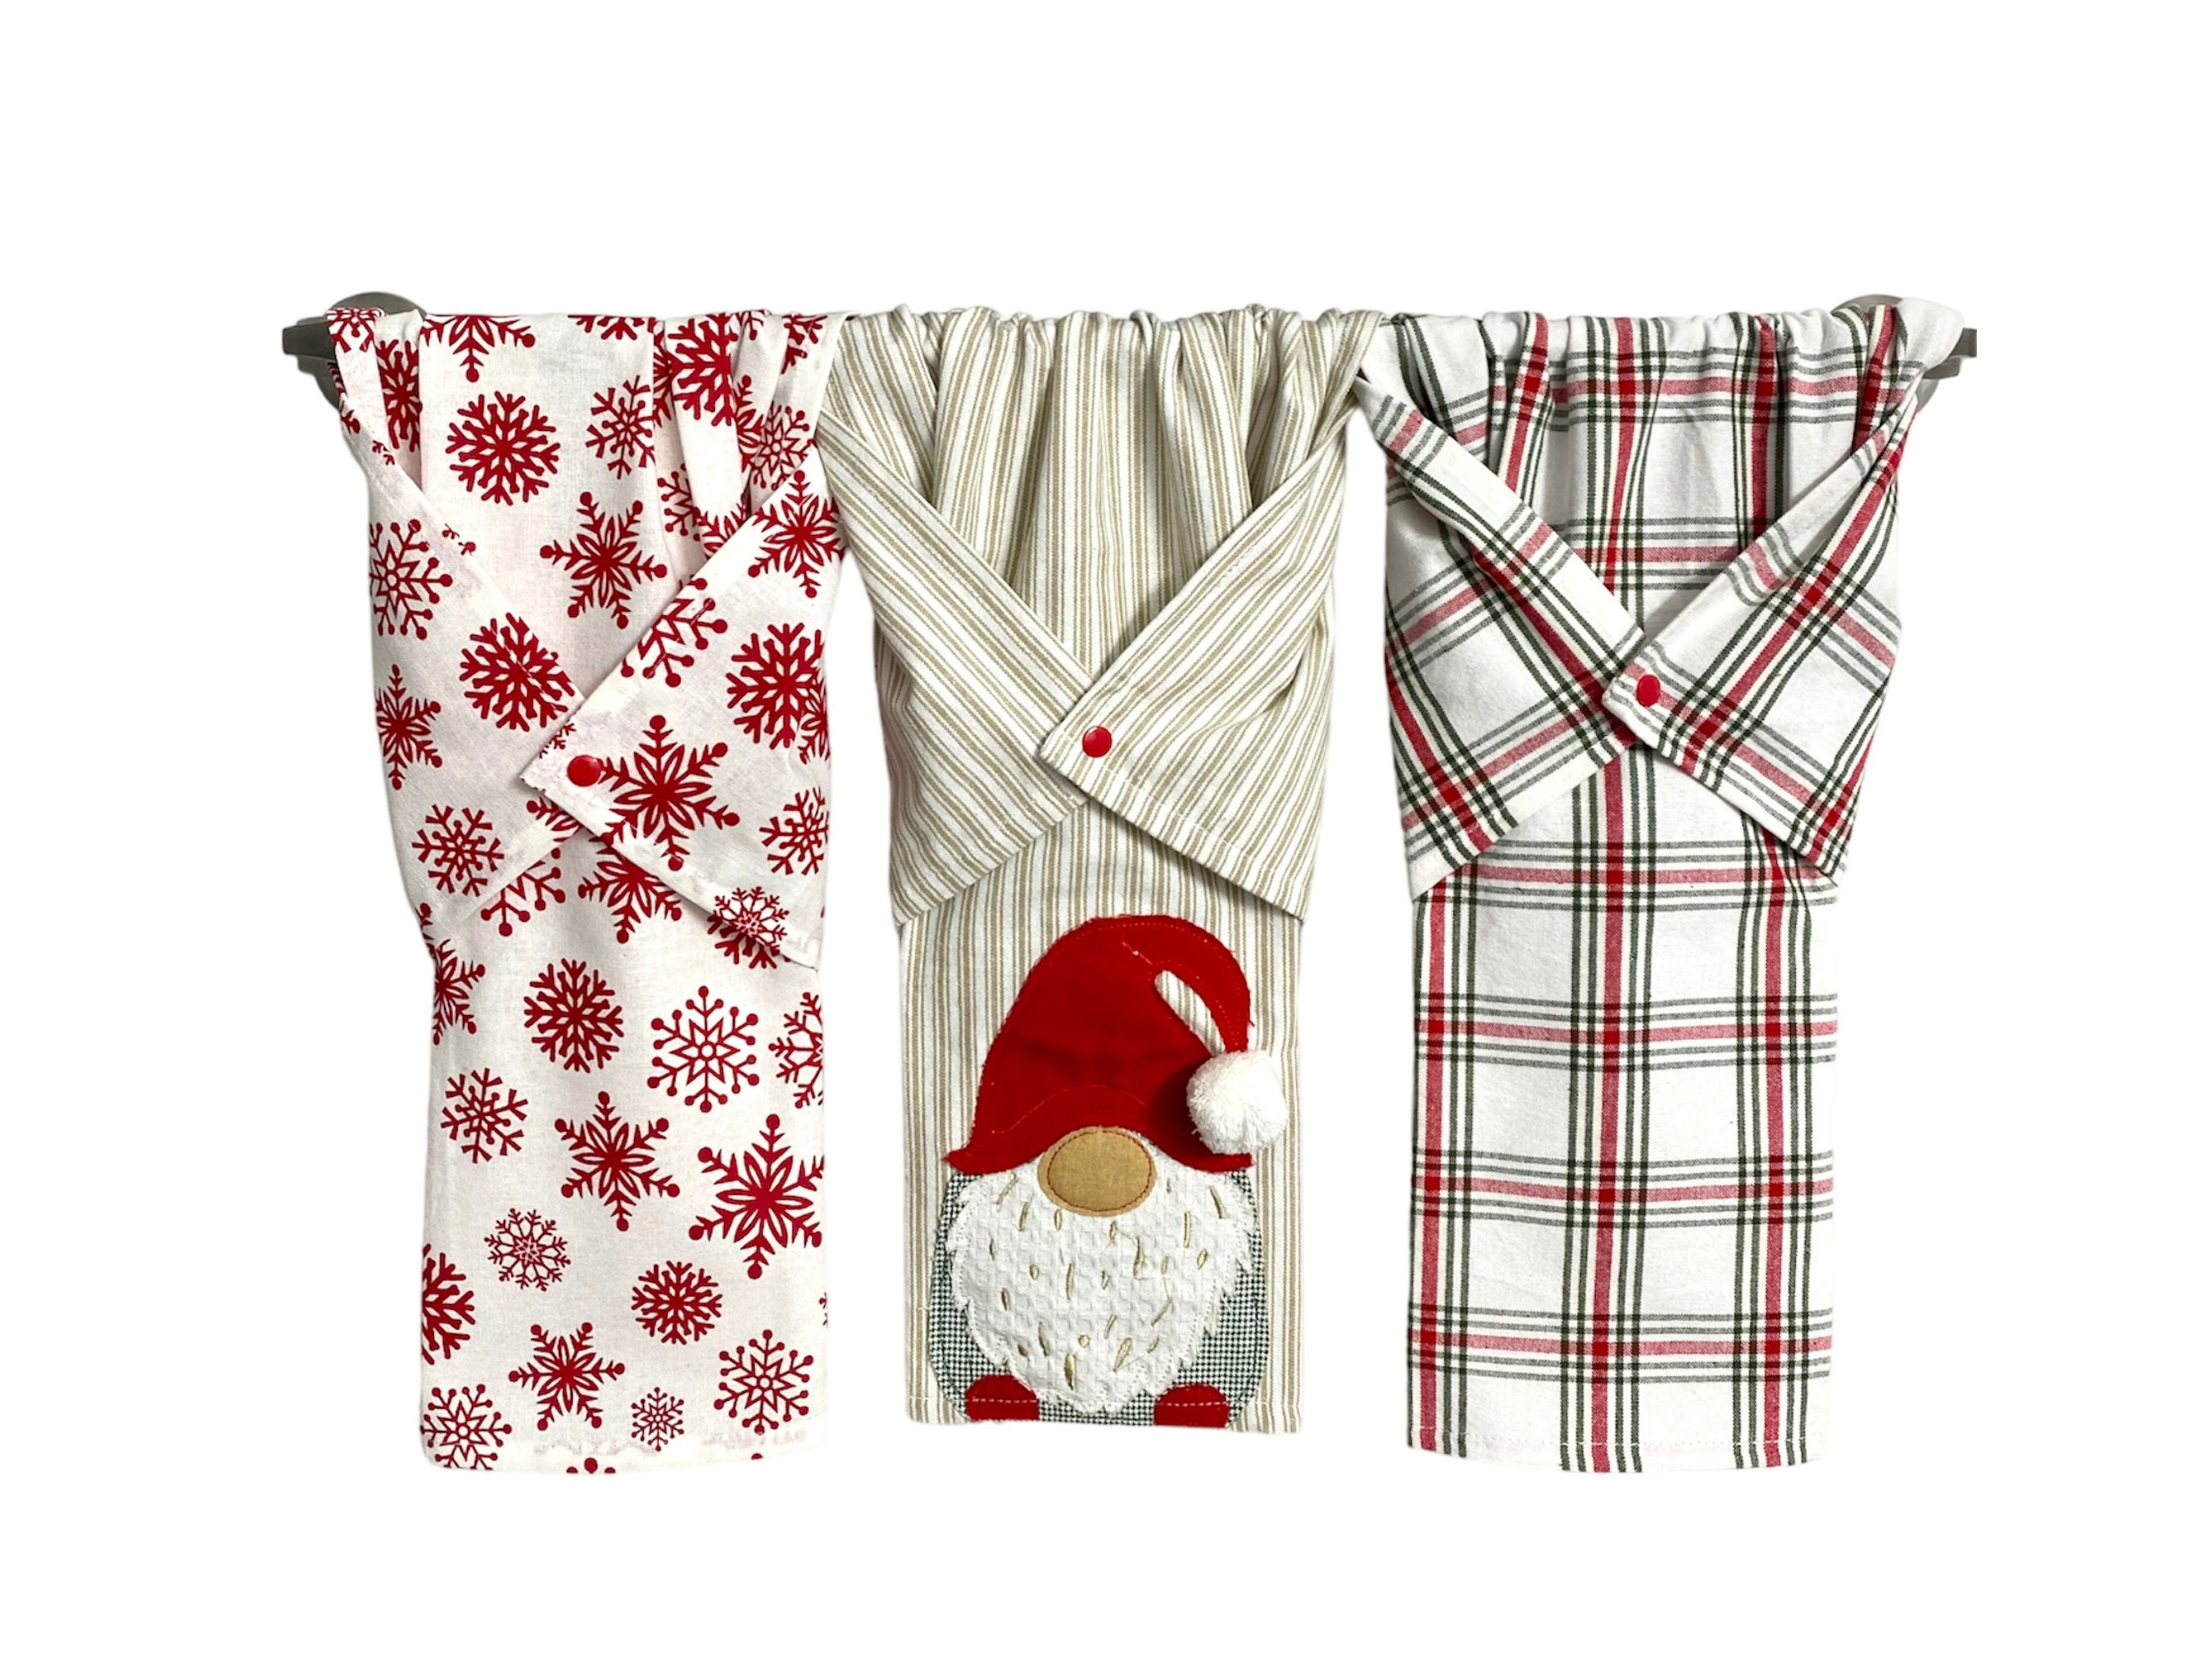 Tartan Plaid Applique Deer Head Farmhouse Kitchen Dish Tea Towel Set of 2  Christmas - Nancy's Daily Dish